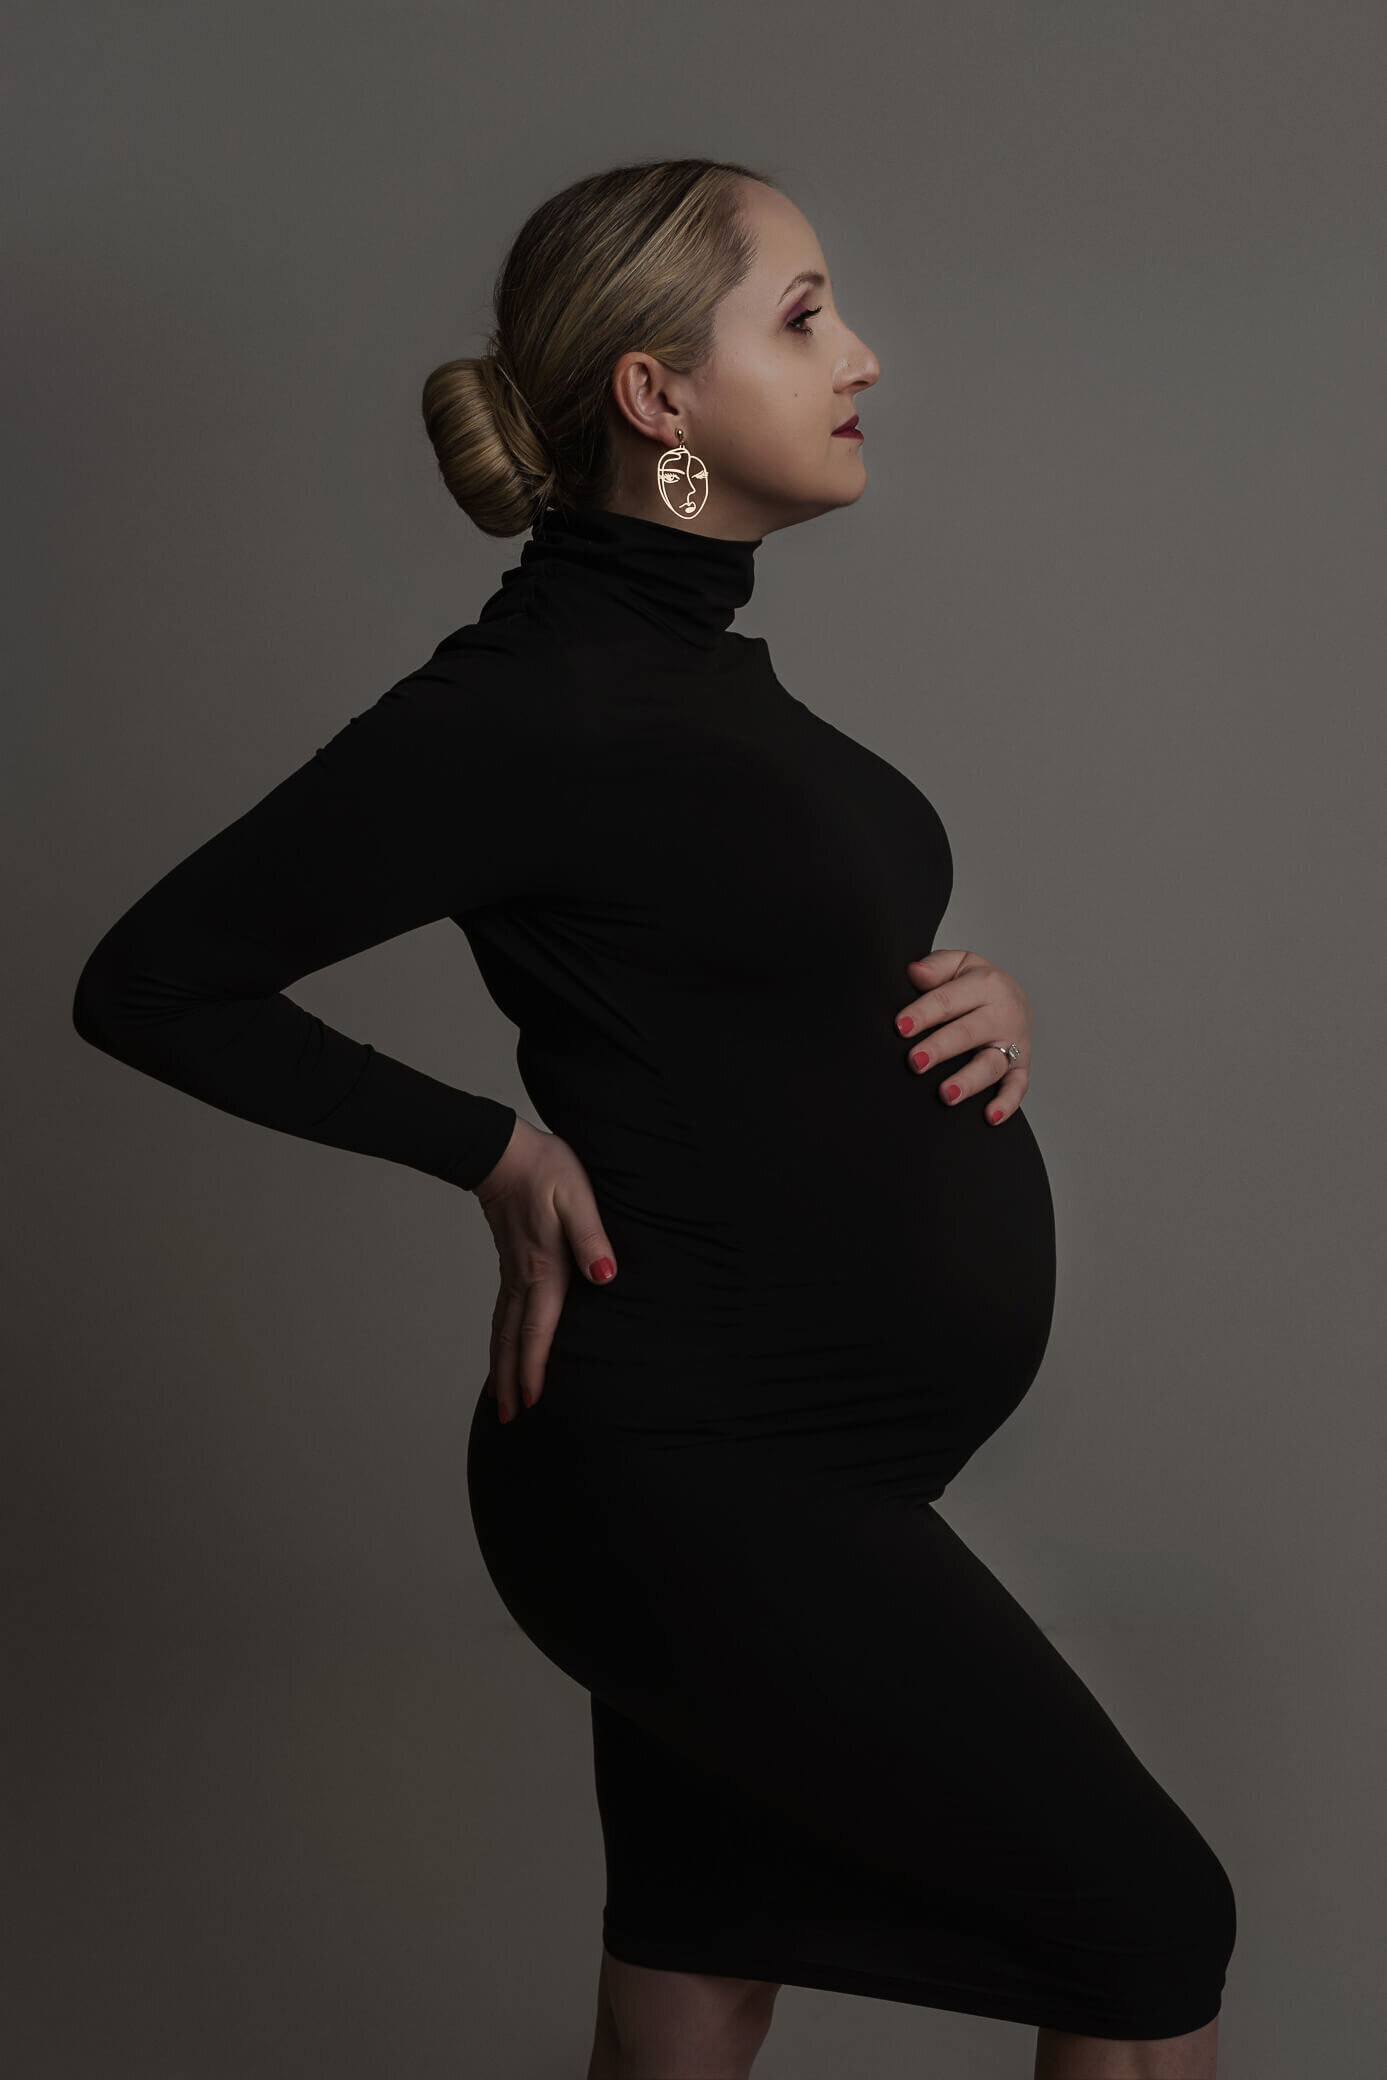 pregnant mom wearing black tight turtle neck dress